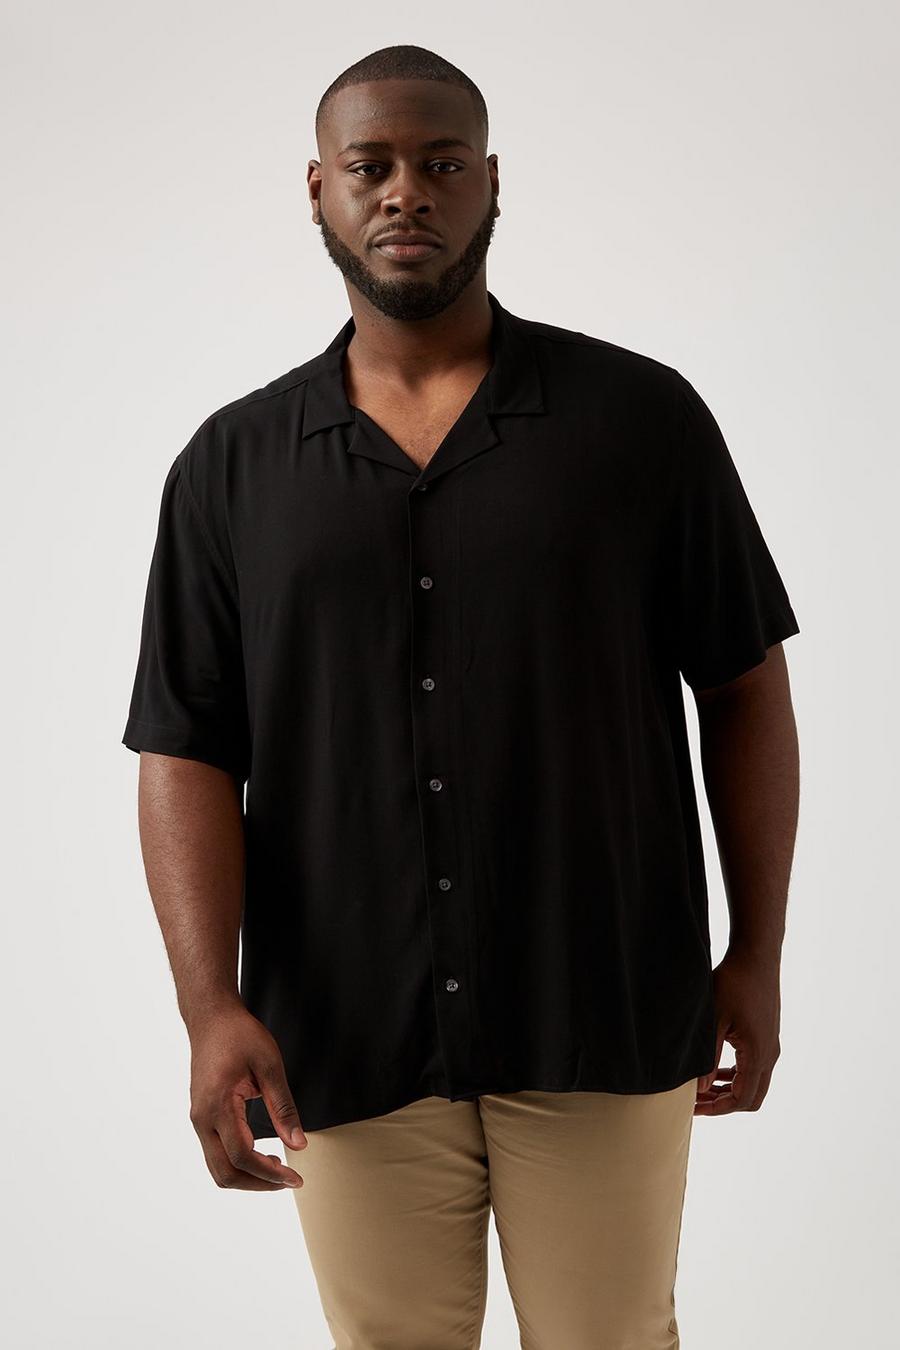 Plus and Tall Boxy Fit Black Viscose Shirt